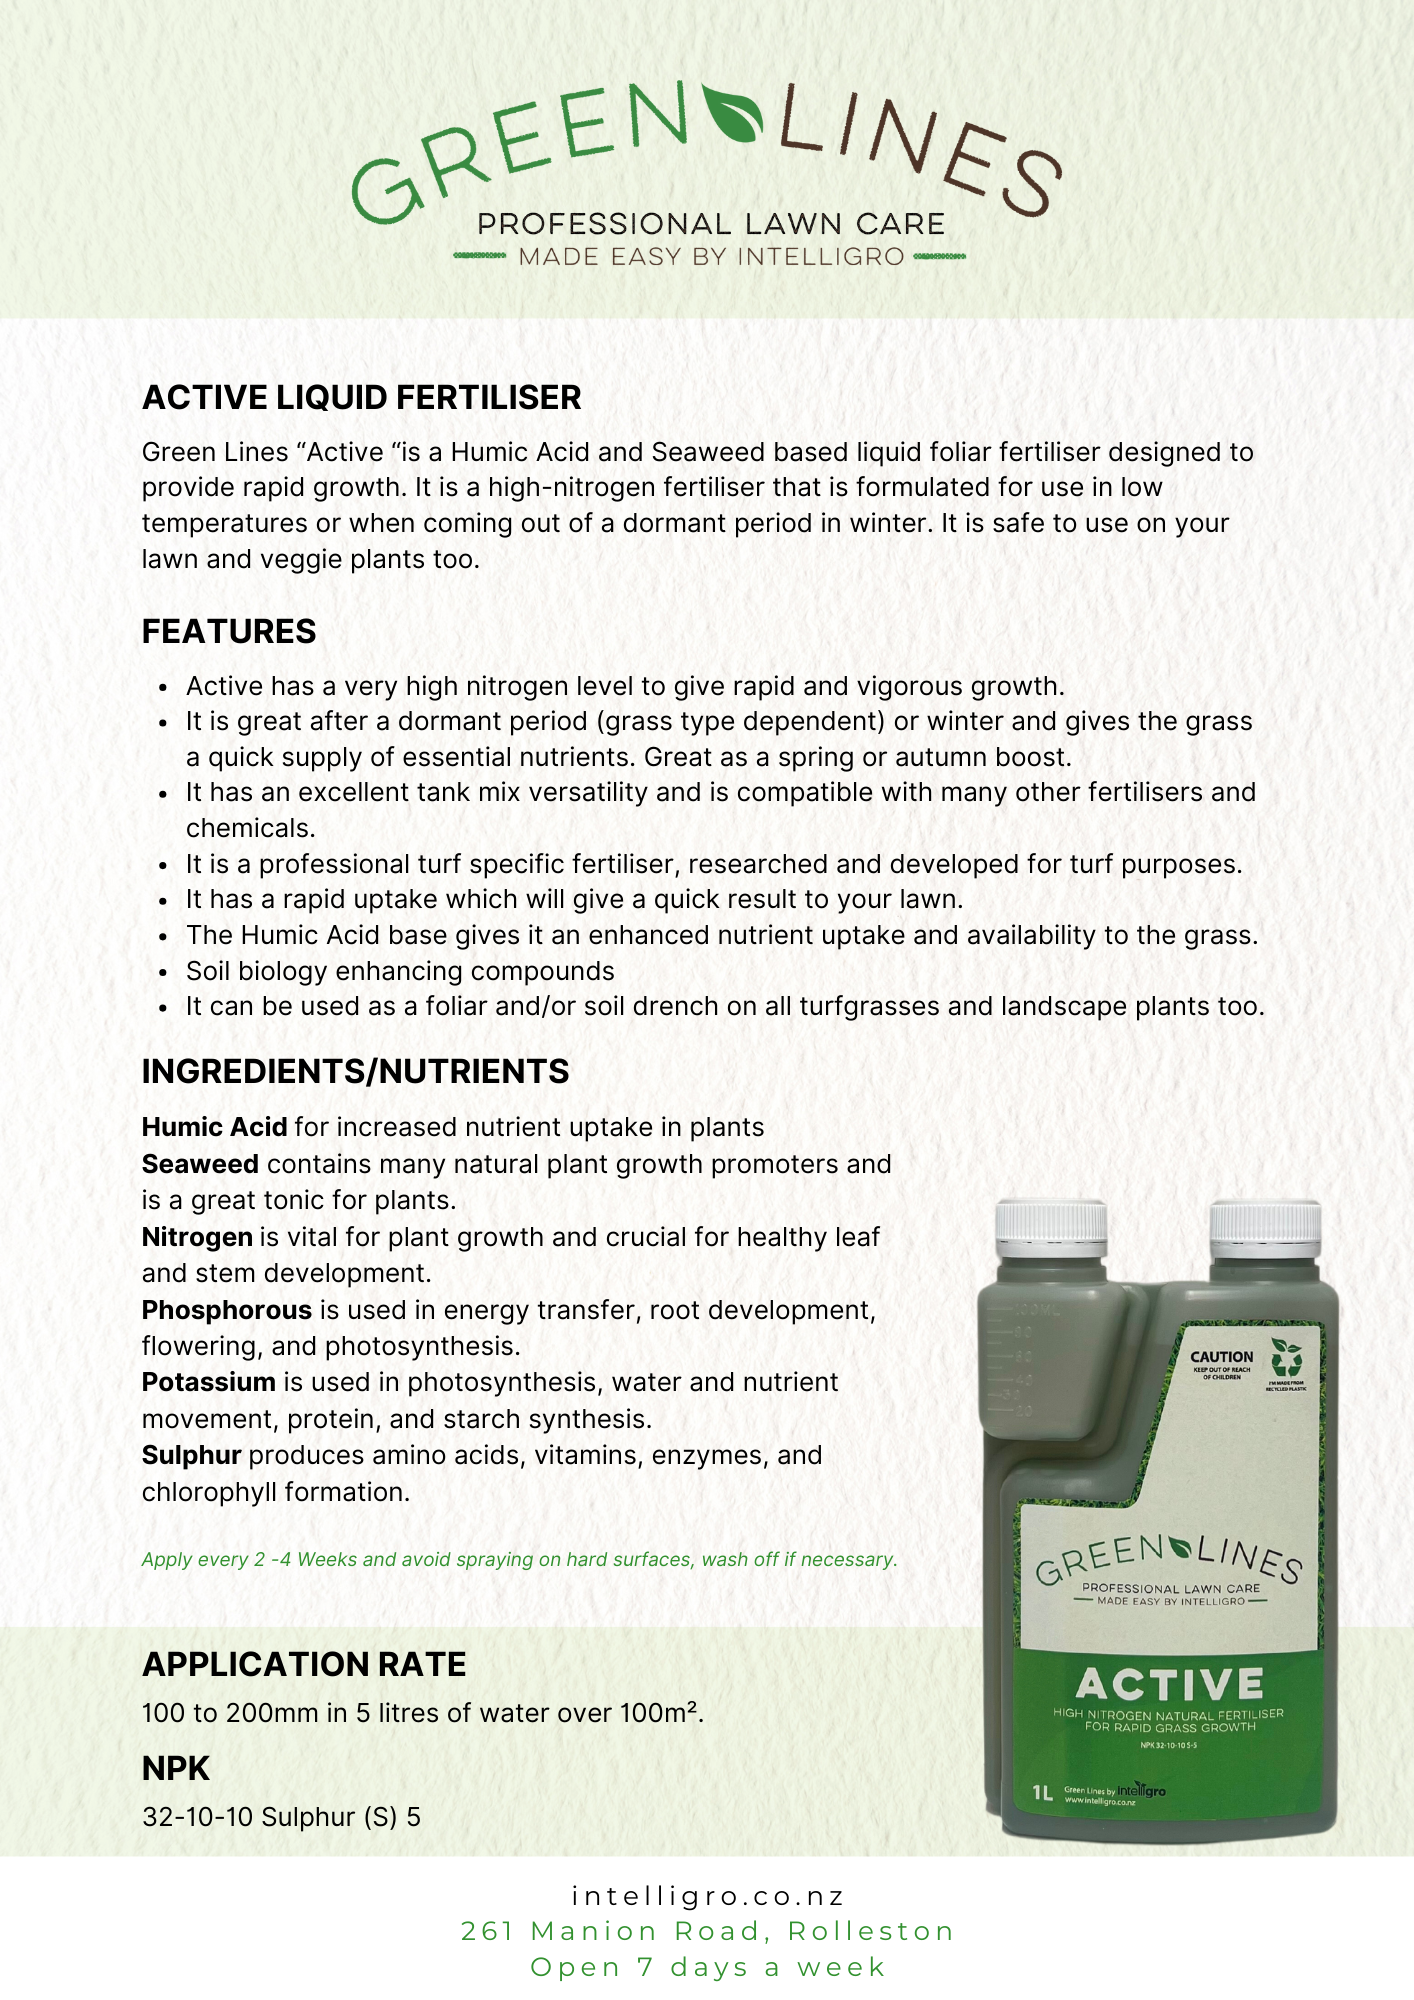 Active Liquid lawn fertiliser by Green Lines